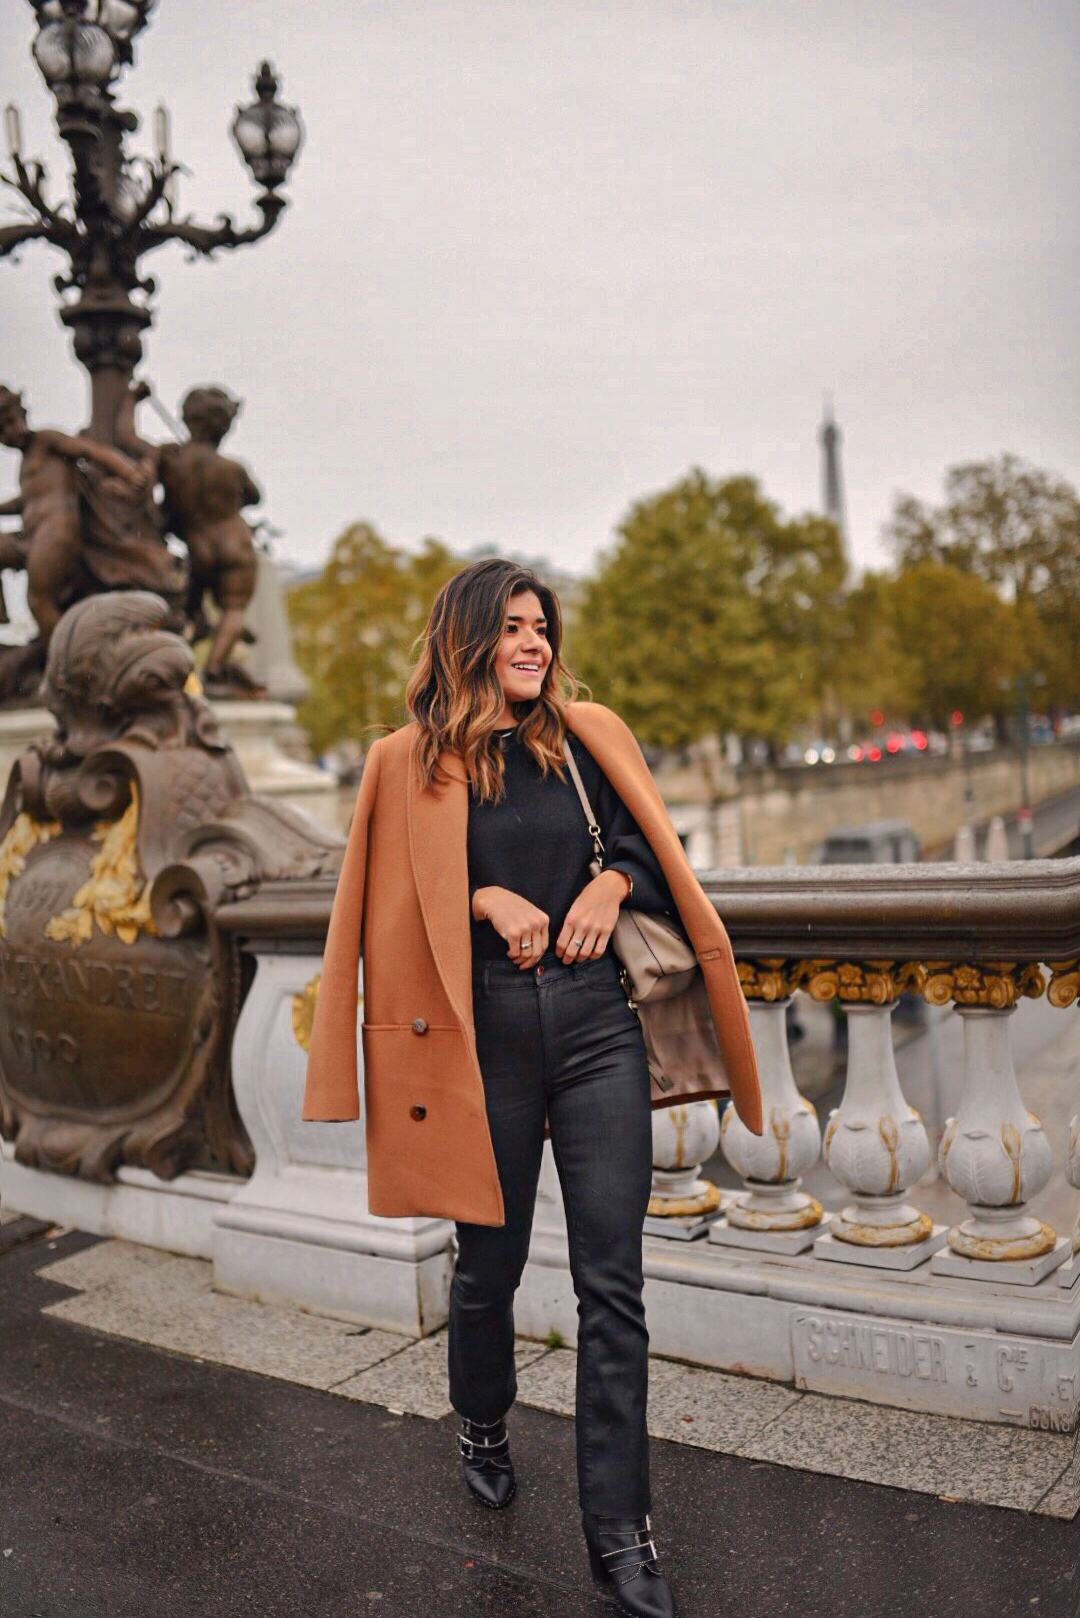 Carolina Hellal of Chic Talk in Paris at the Pont Alexander III wearing a Sezane camel coat